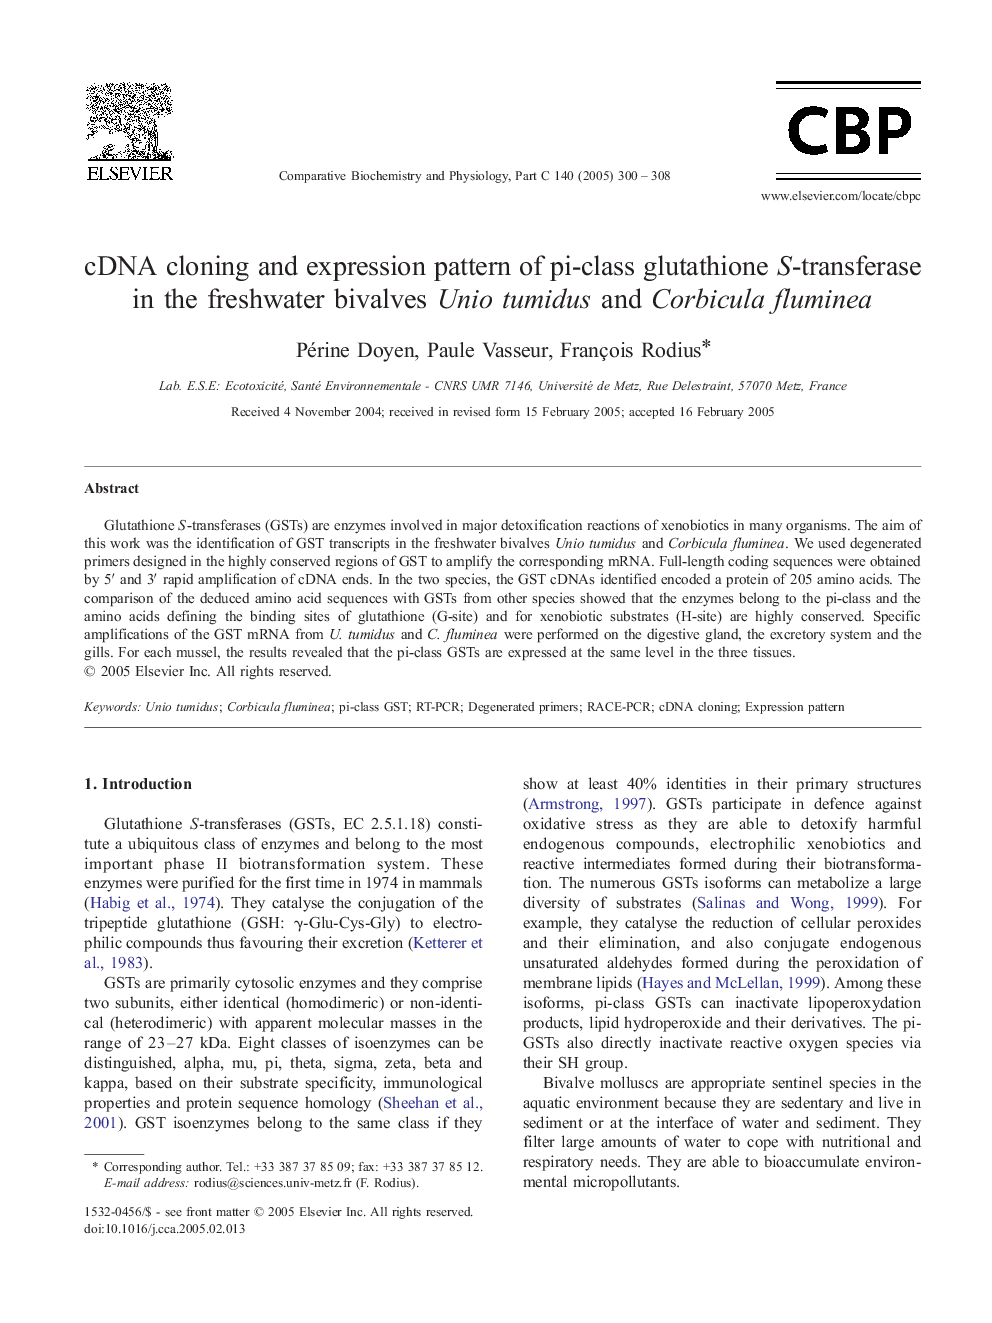 cDNA cloning and expression pattern of pi-class glutathione S-transferase in the freshwater bivalves Unio tumidus and Corbicula fluminea